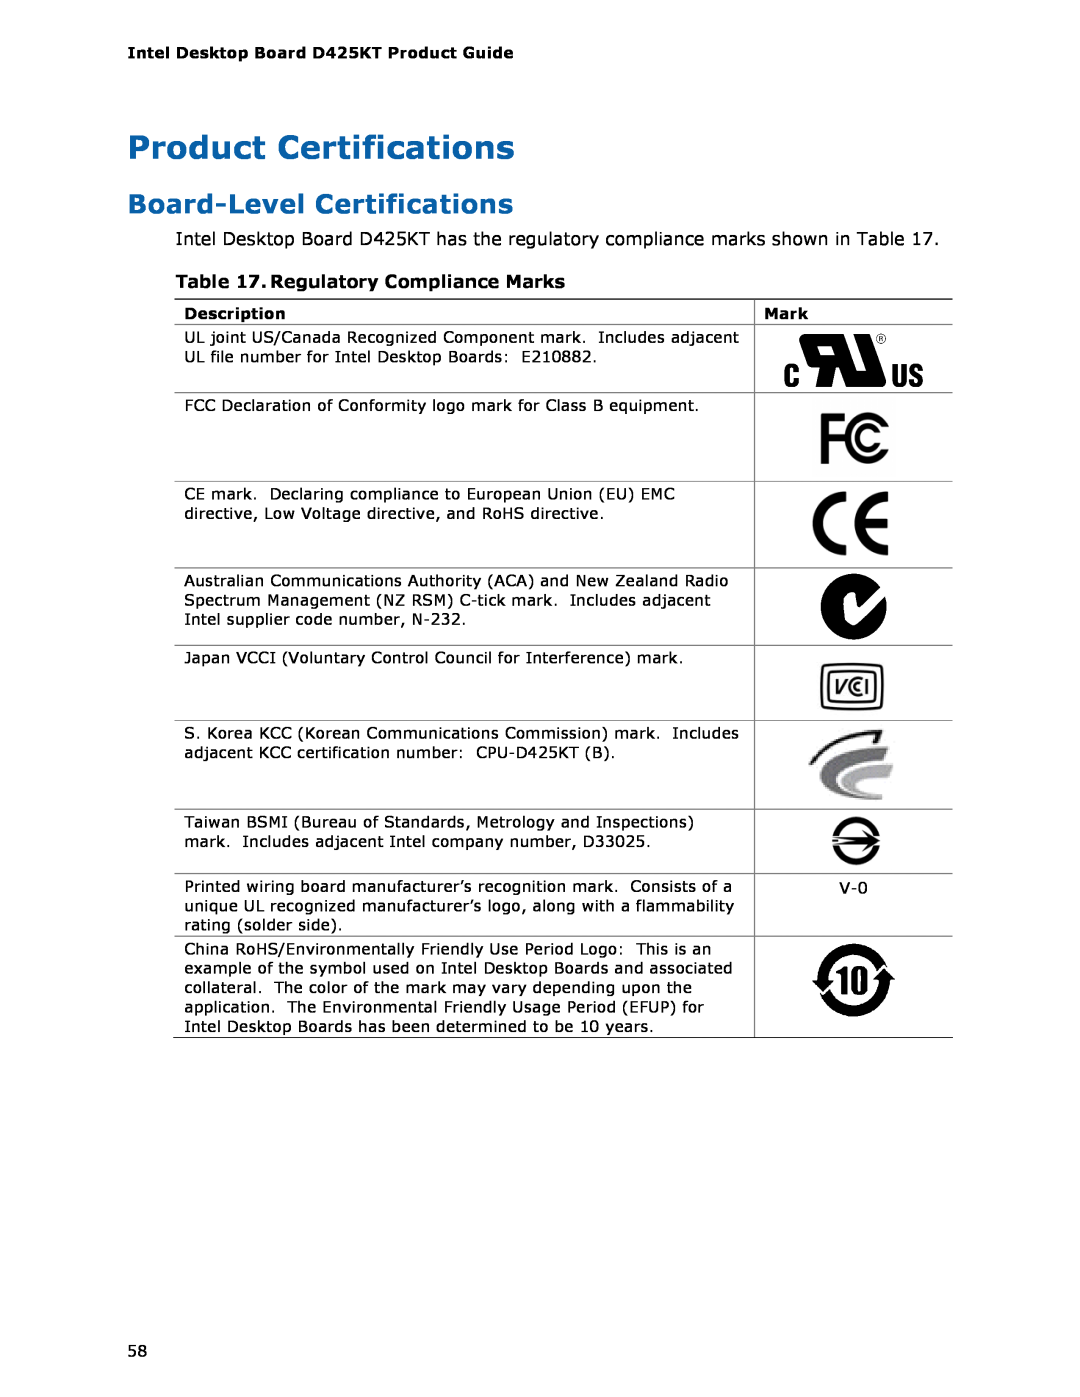 Intel D425KT manual Product Certifications, Board-Level Certifications, Regulatory Compliance Marks 